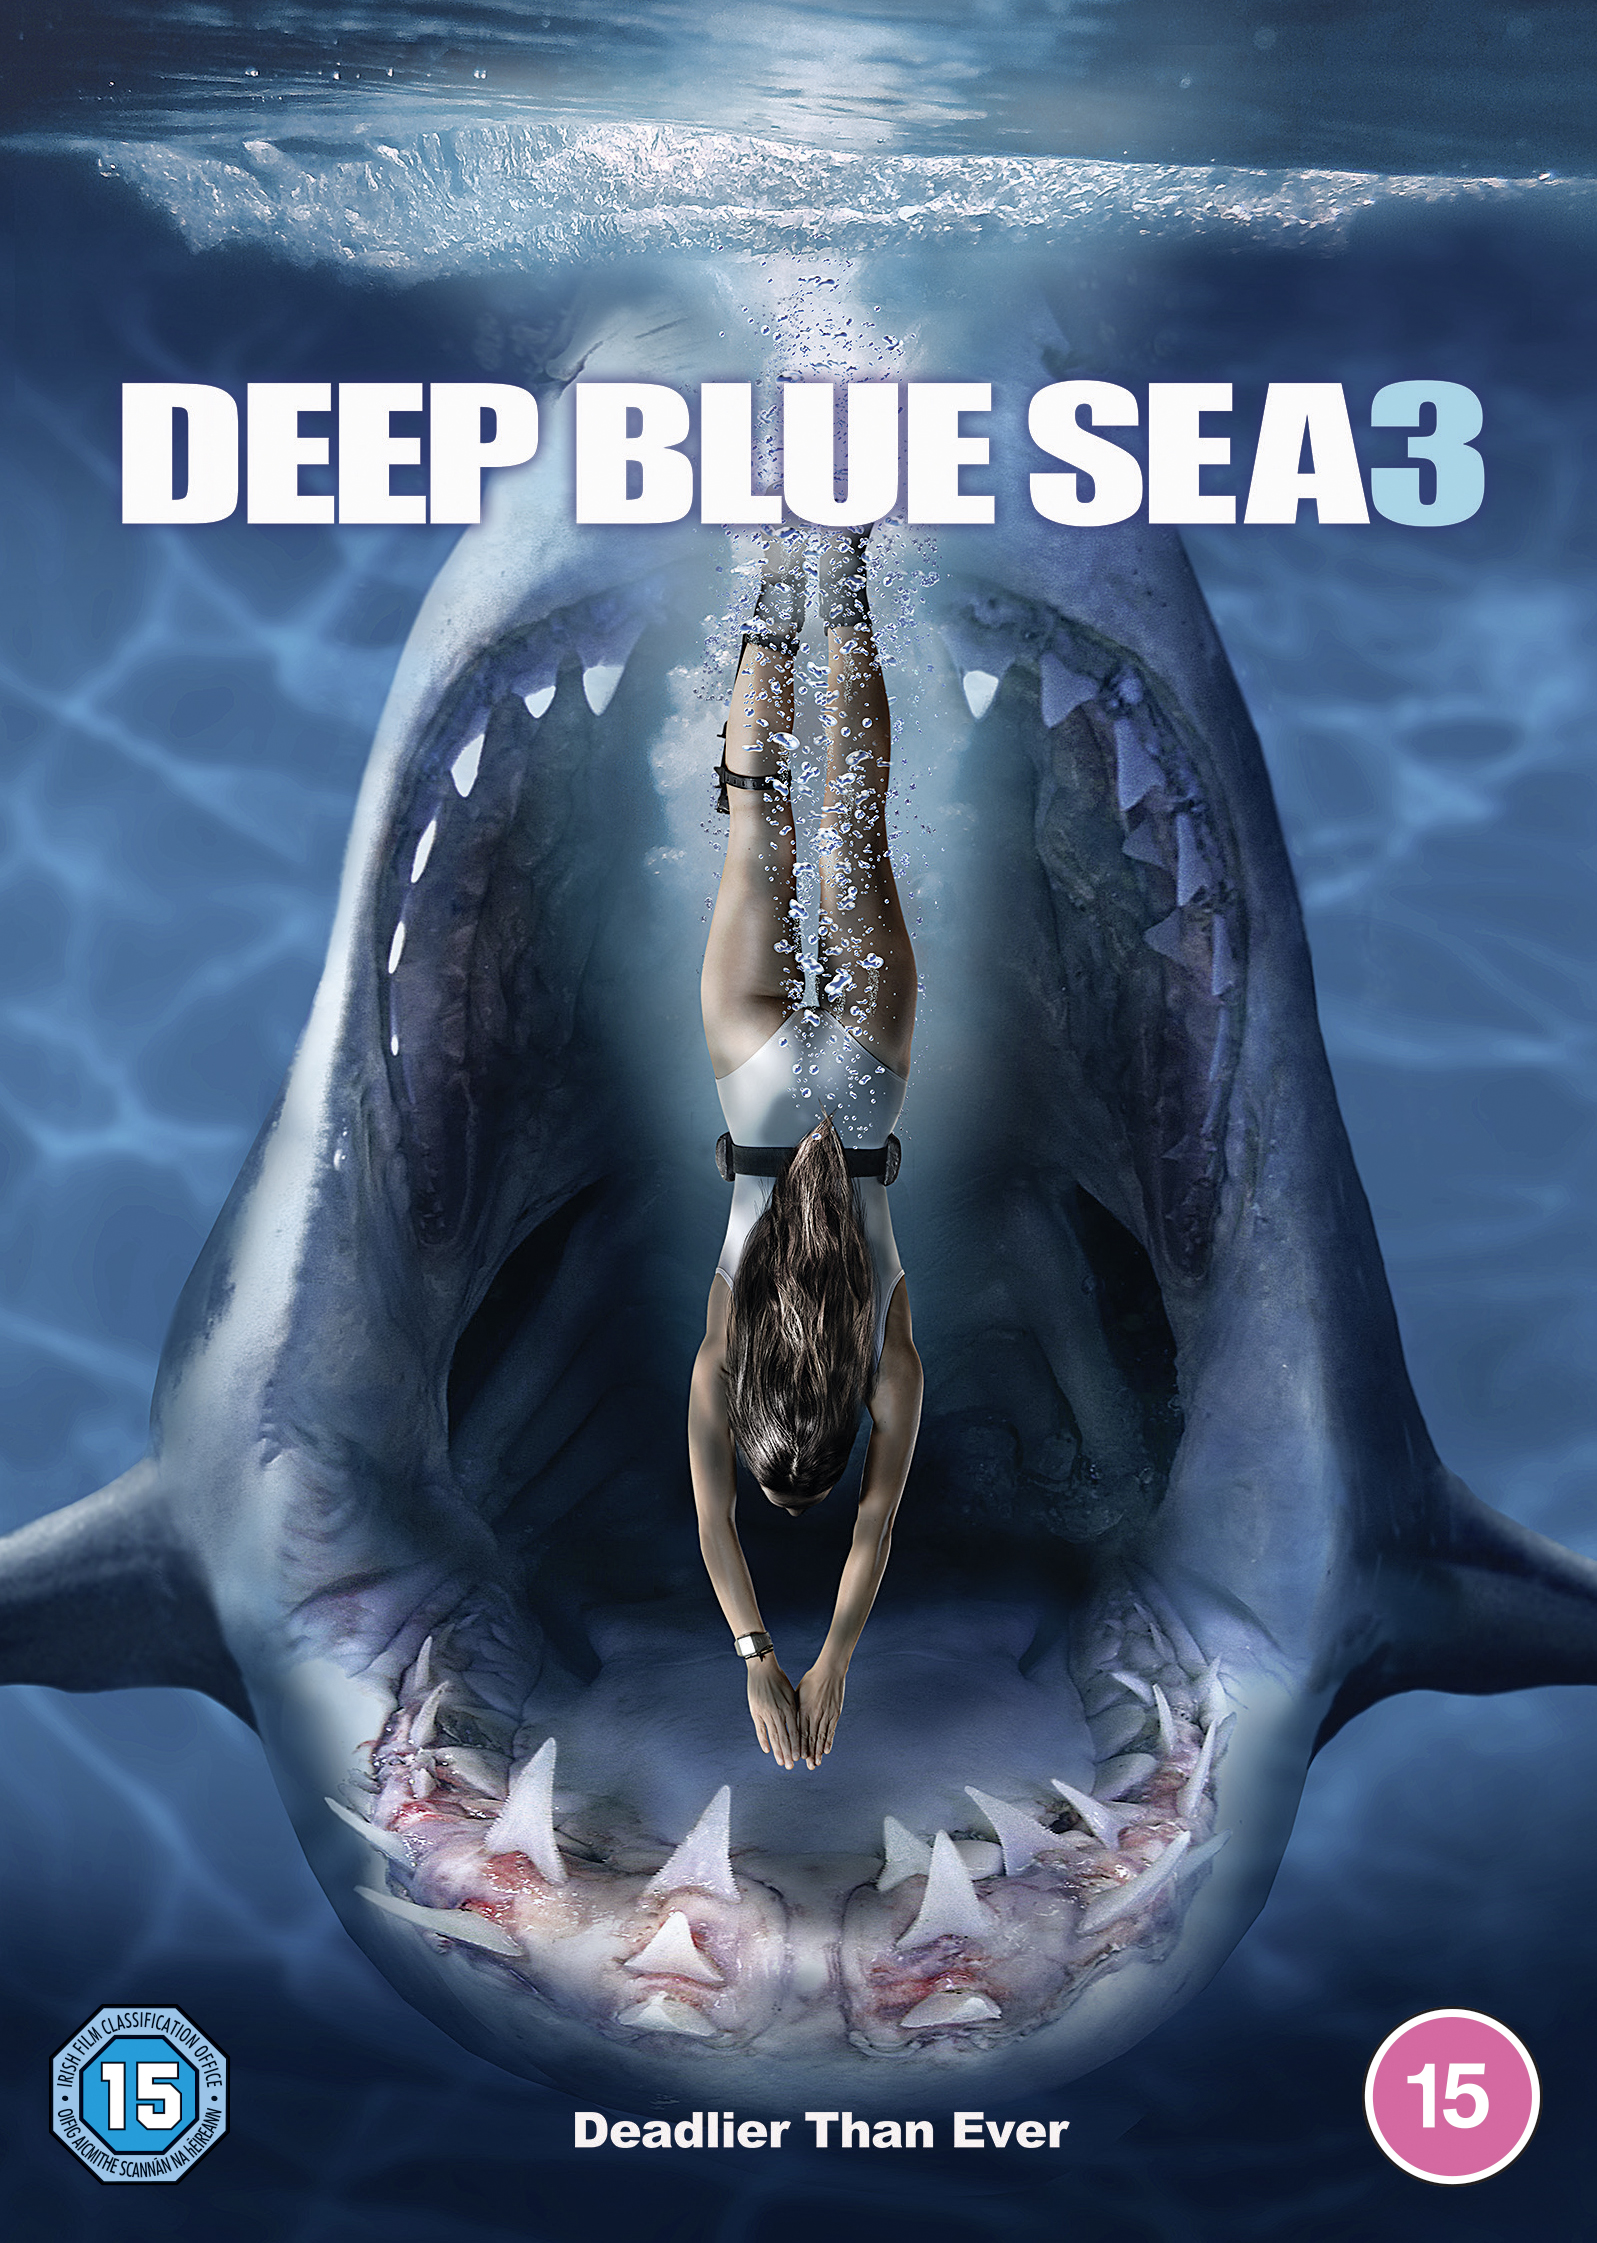 Deep Blue Sea 3: It’s fintastic